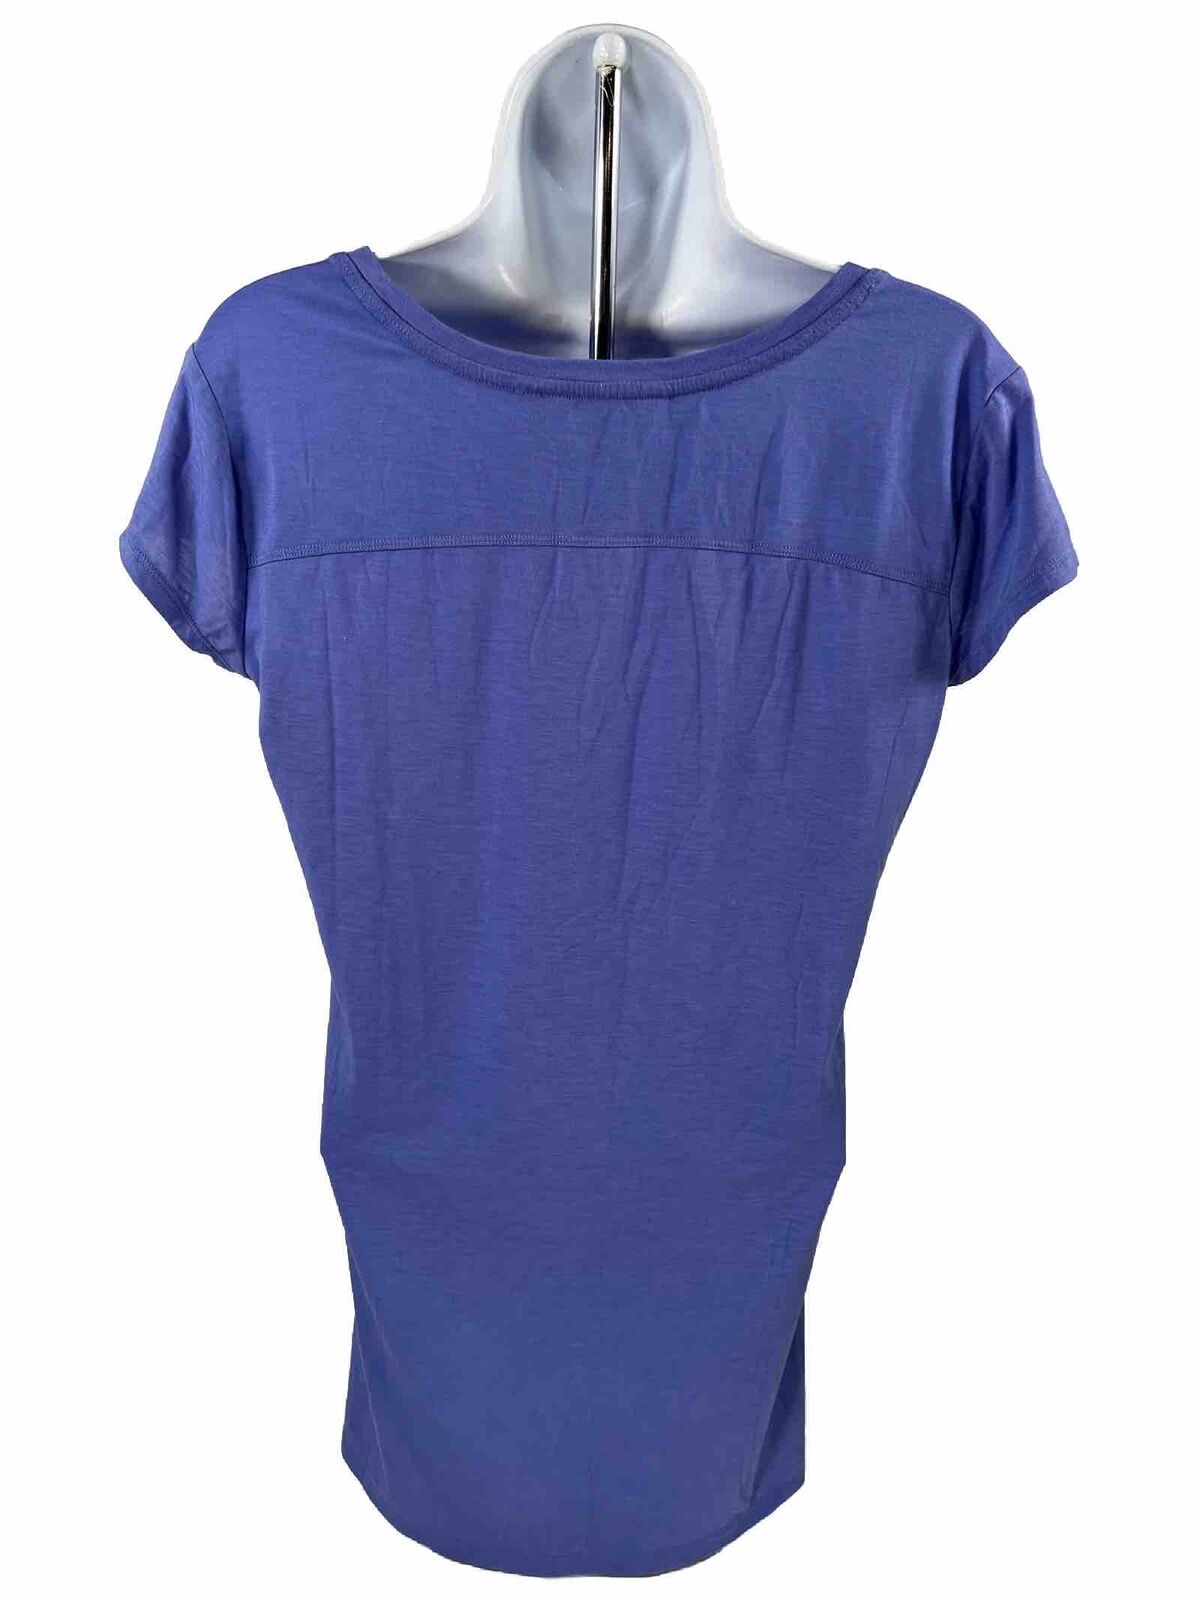 Athleta Women's Purple Short Sleeve T-Shirt - M